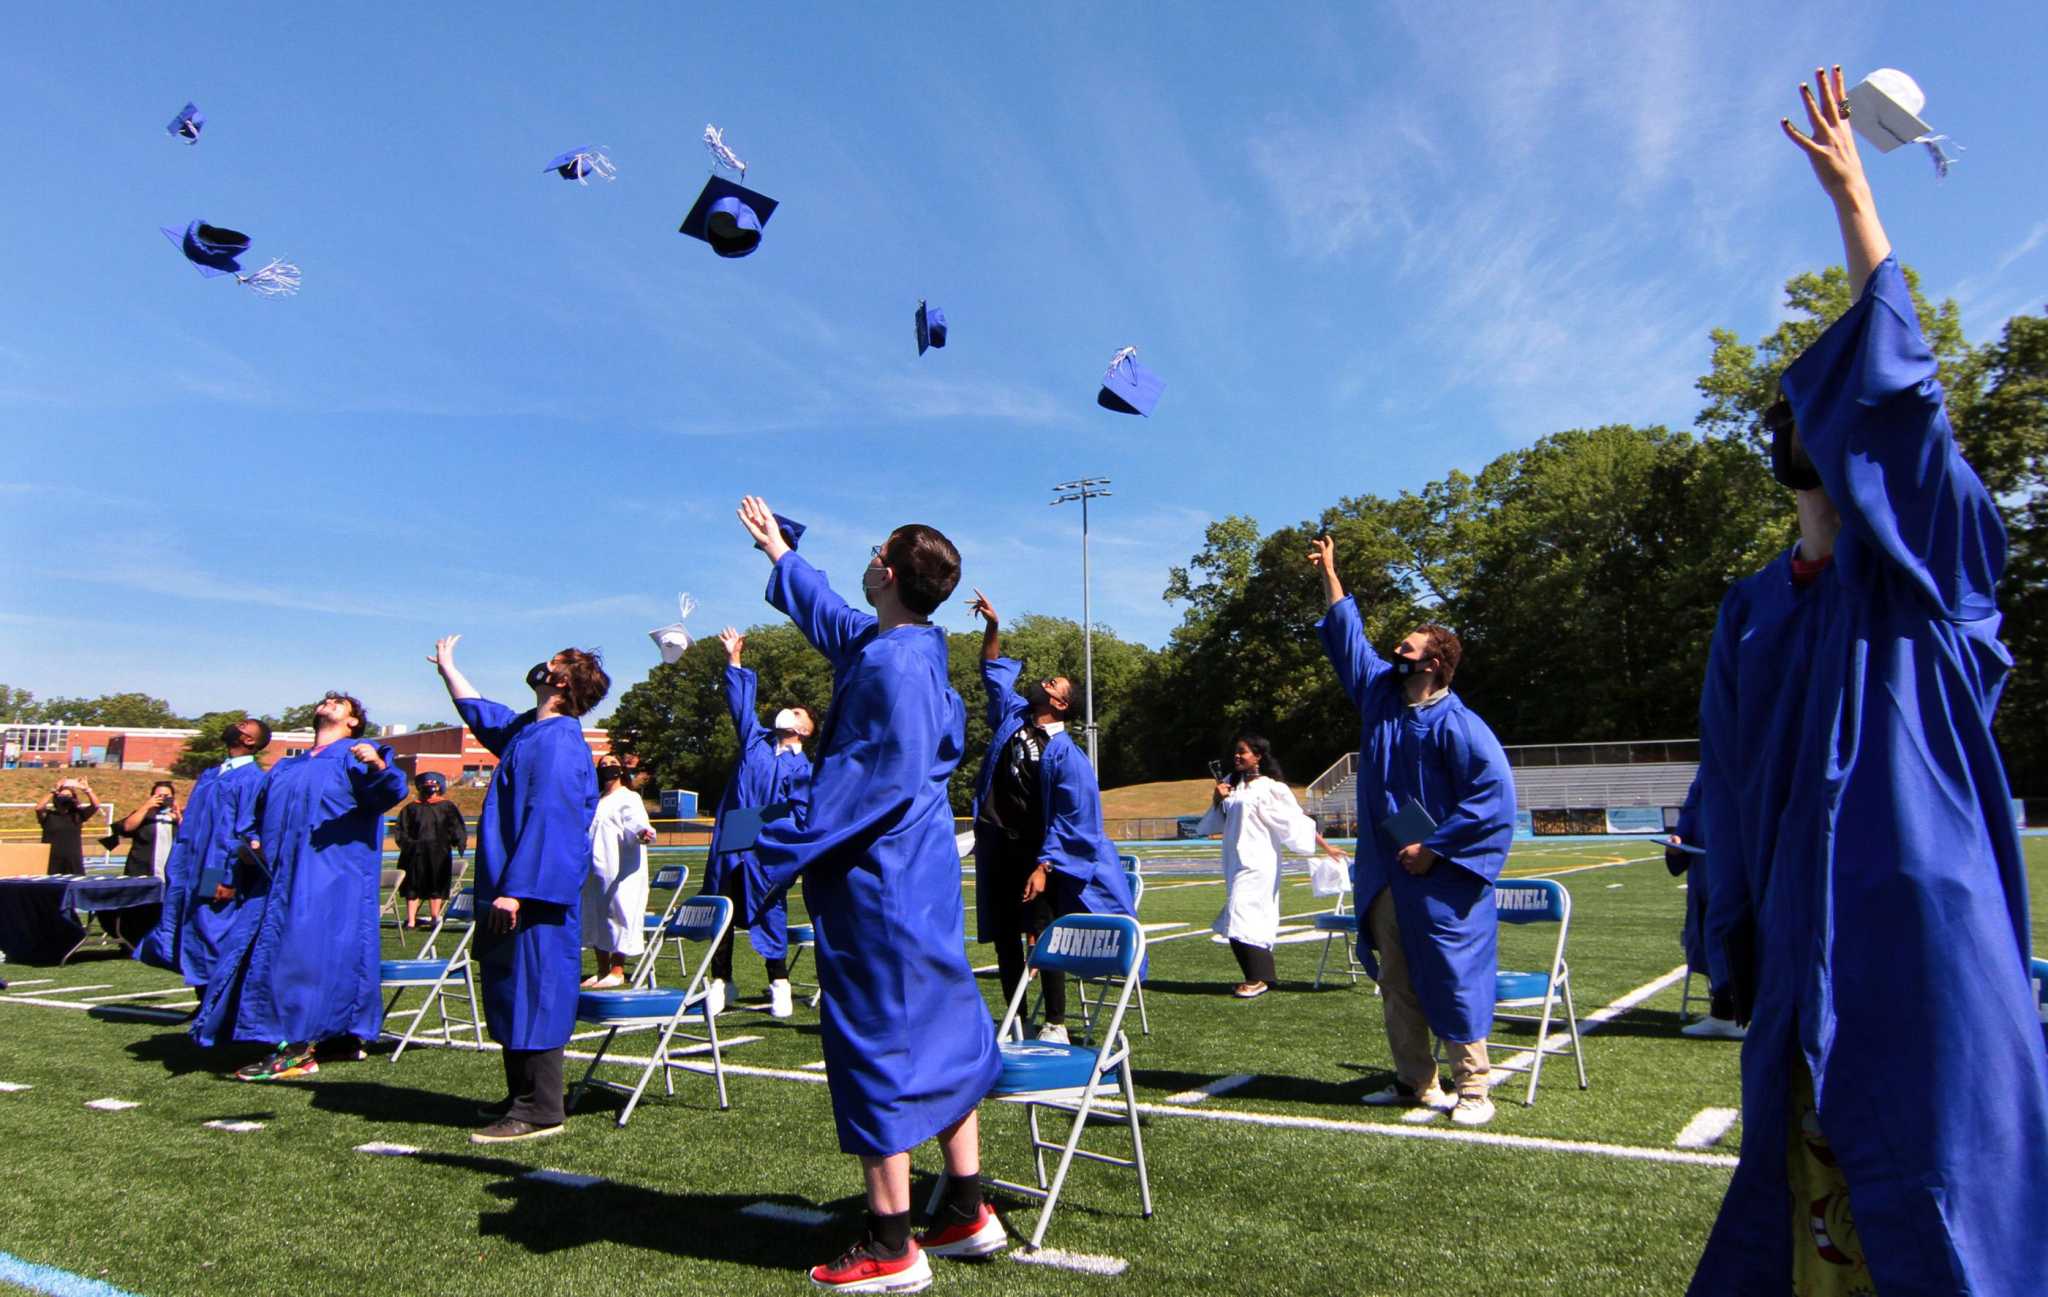 Photos: A cap toss at Bunnell High School's socially distant graduation